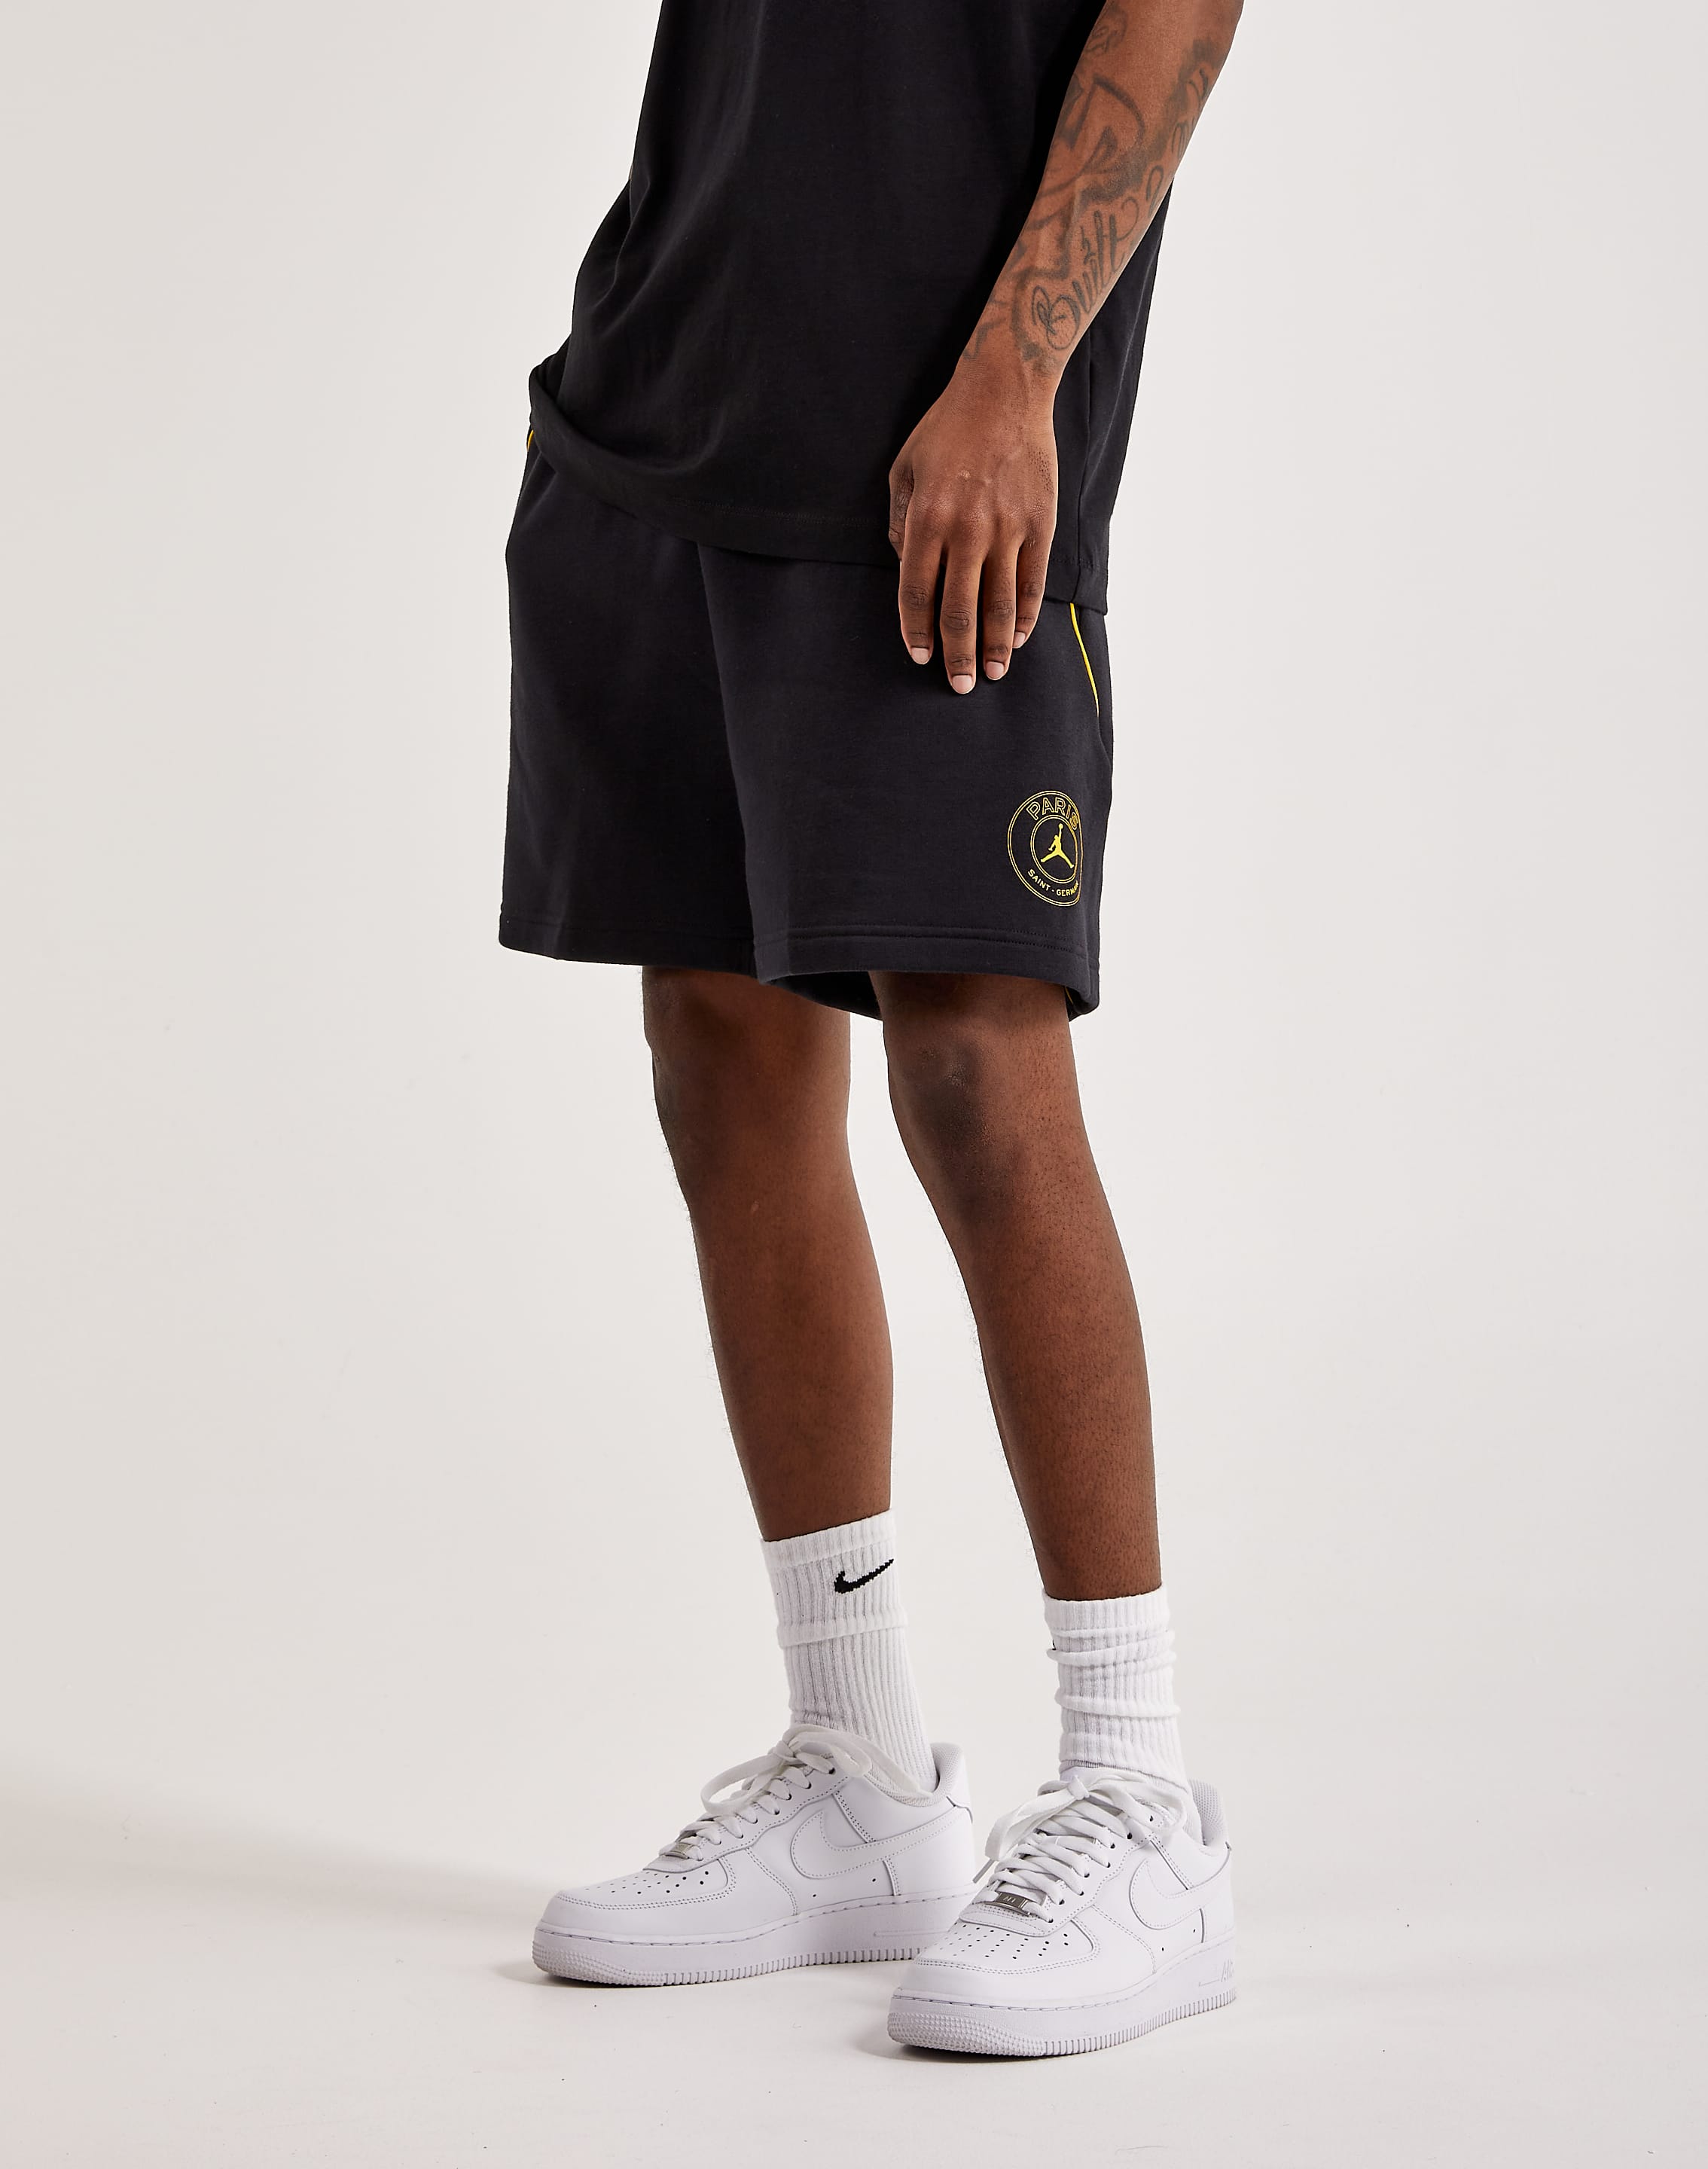 Jordan PSG logo shorts in black